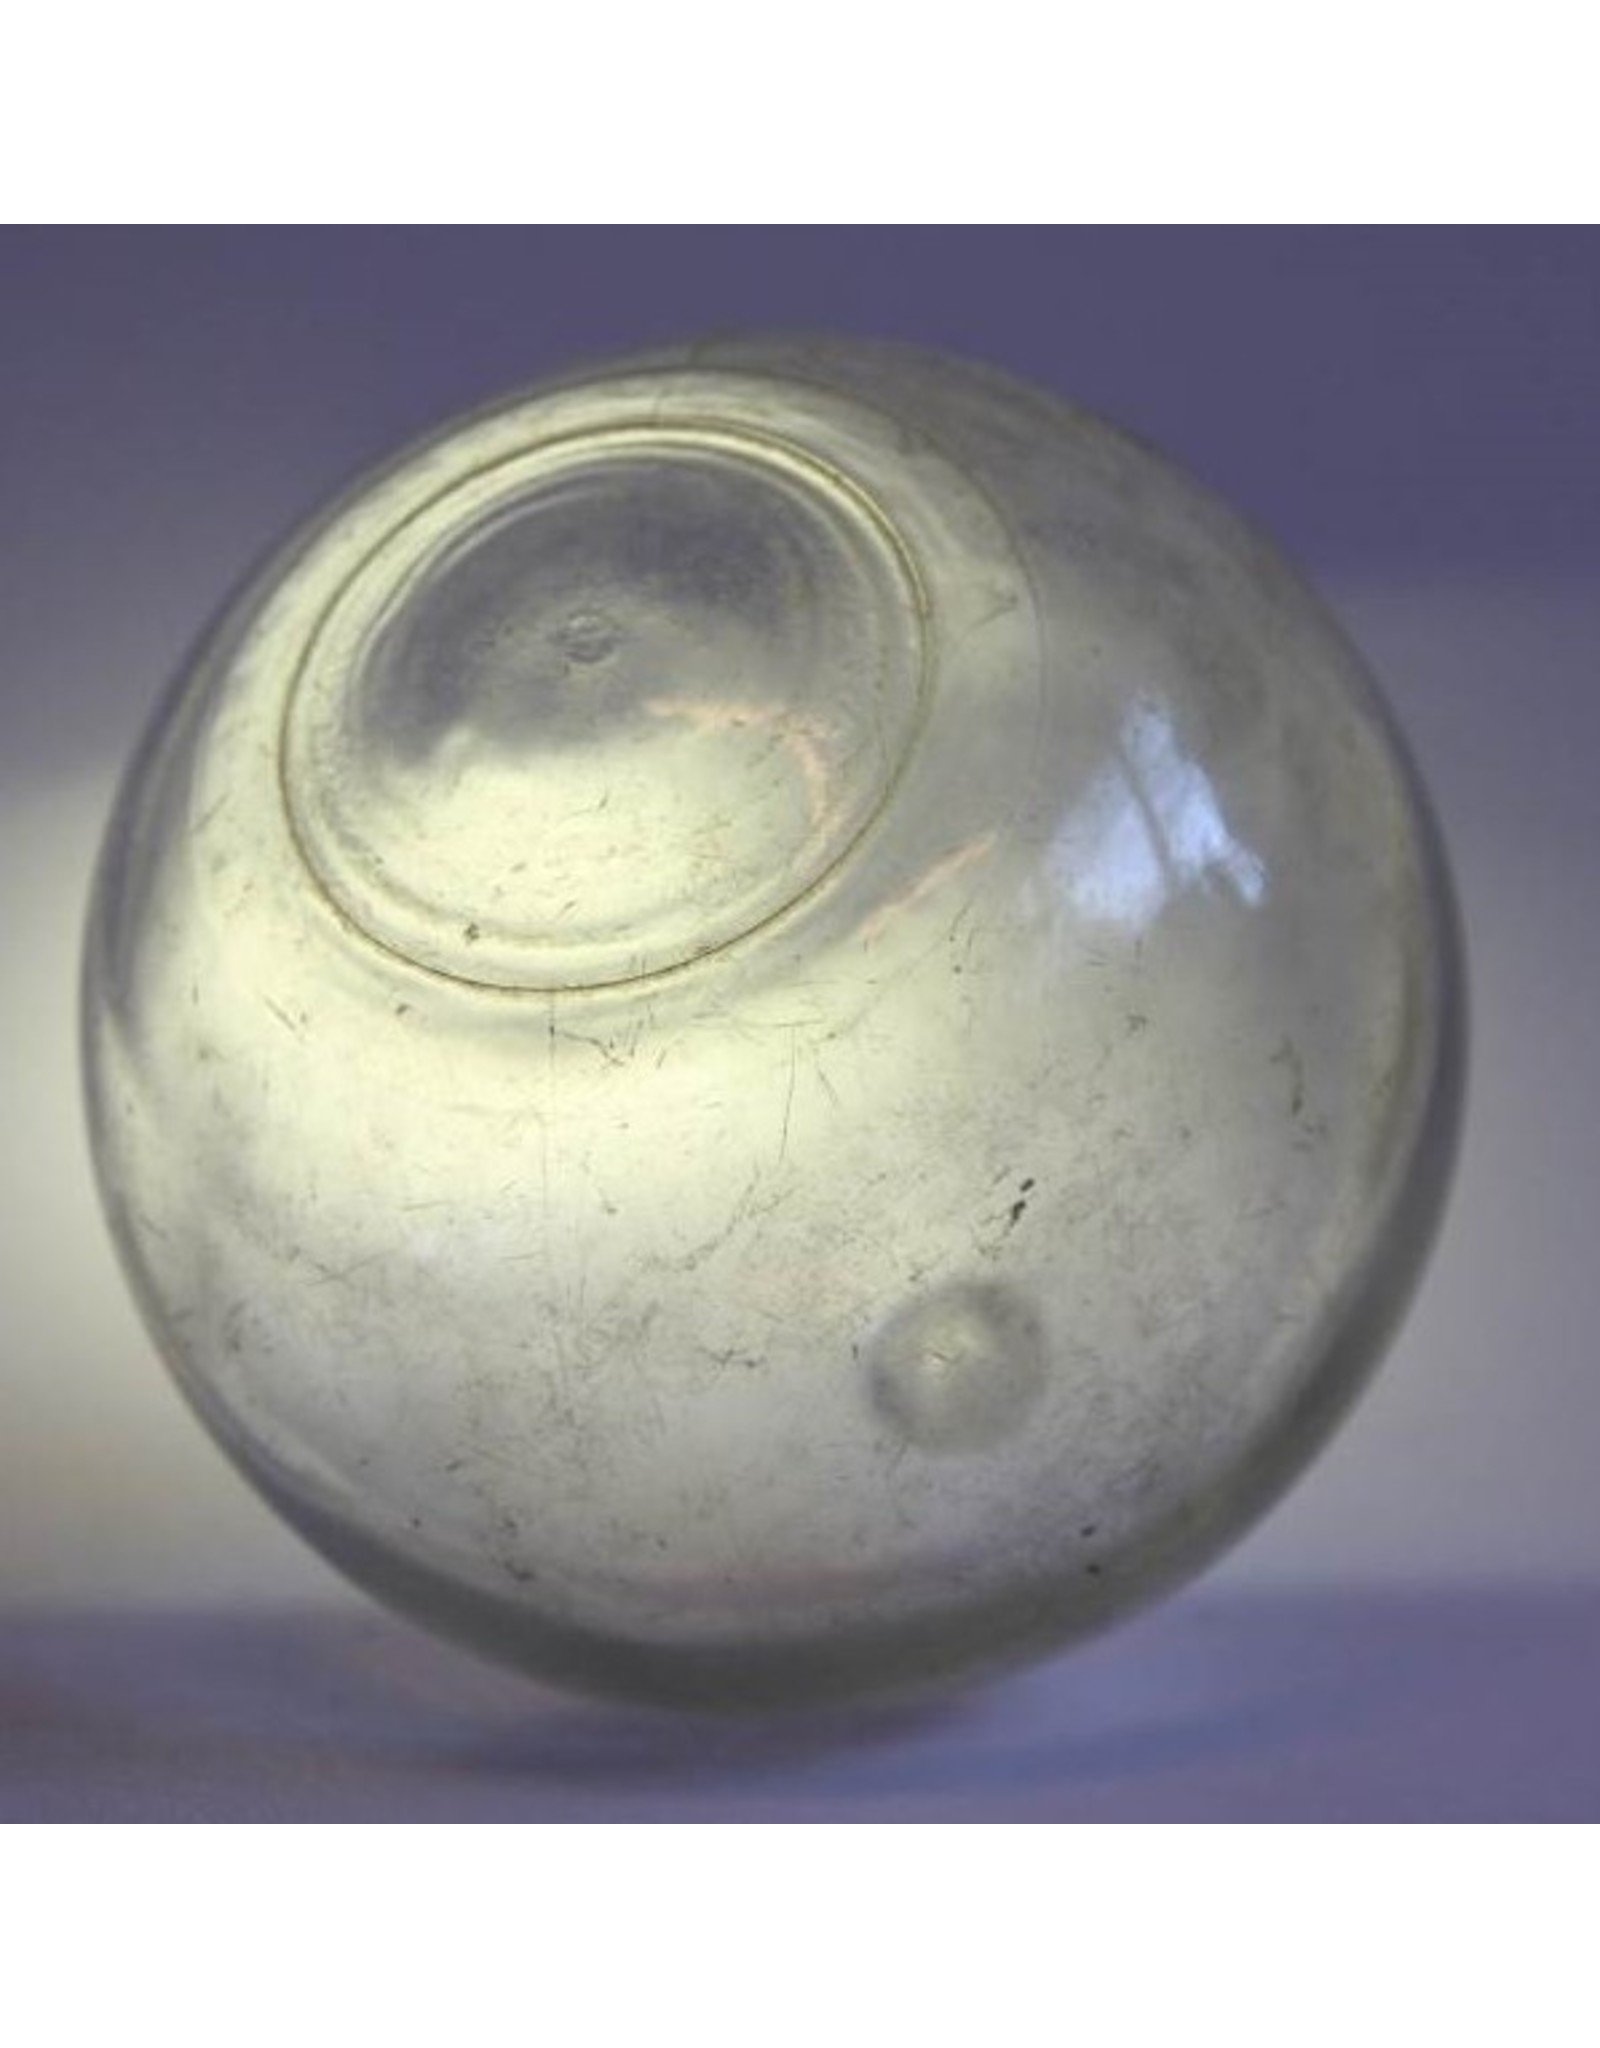 Glass floats - American 1940s, no net